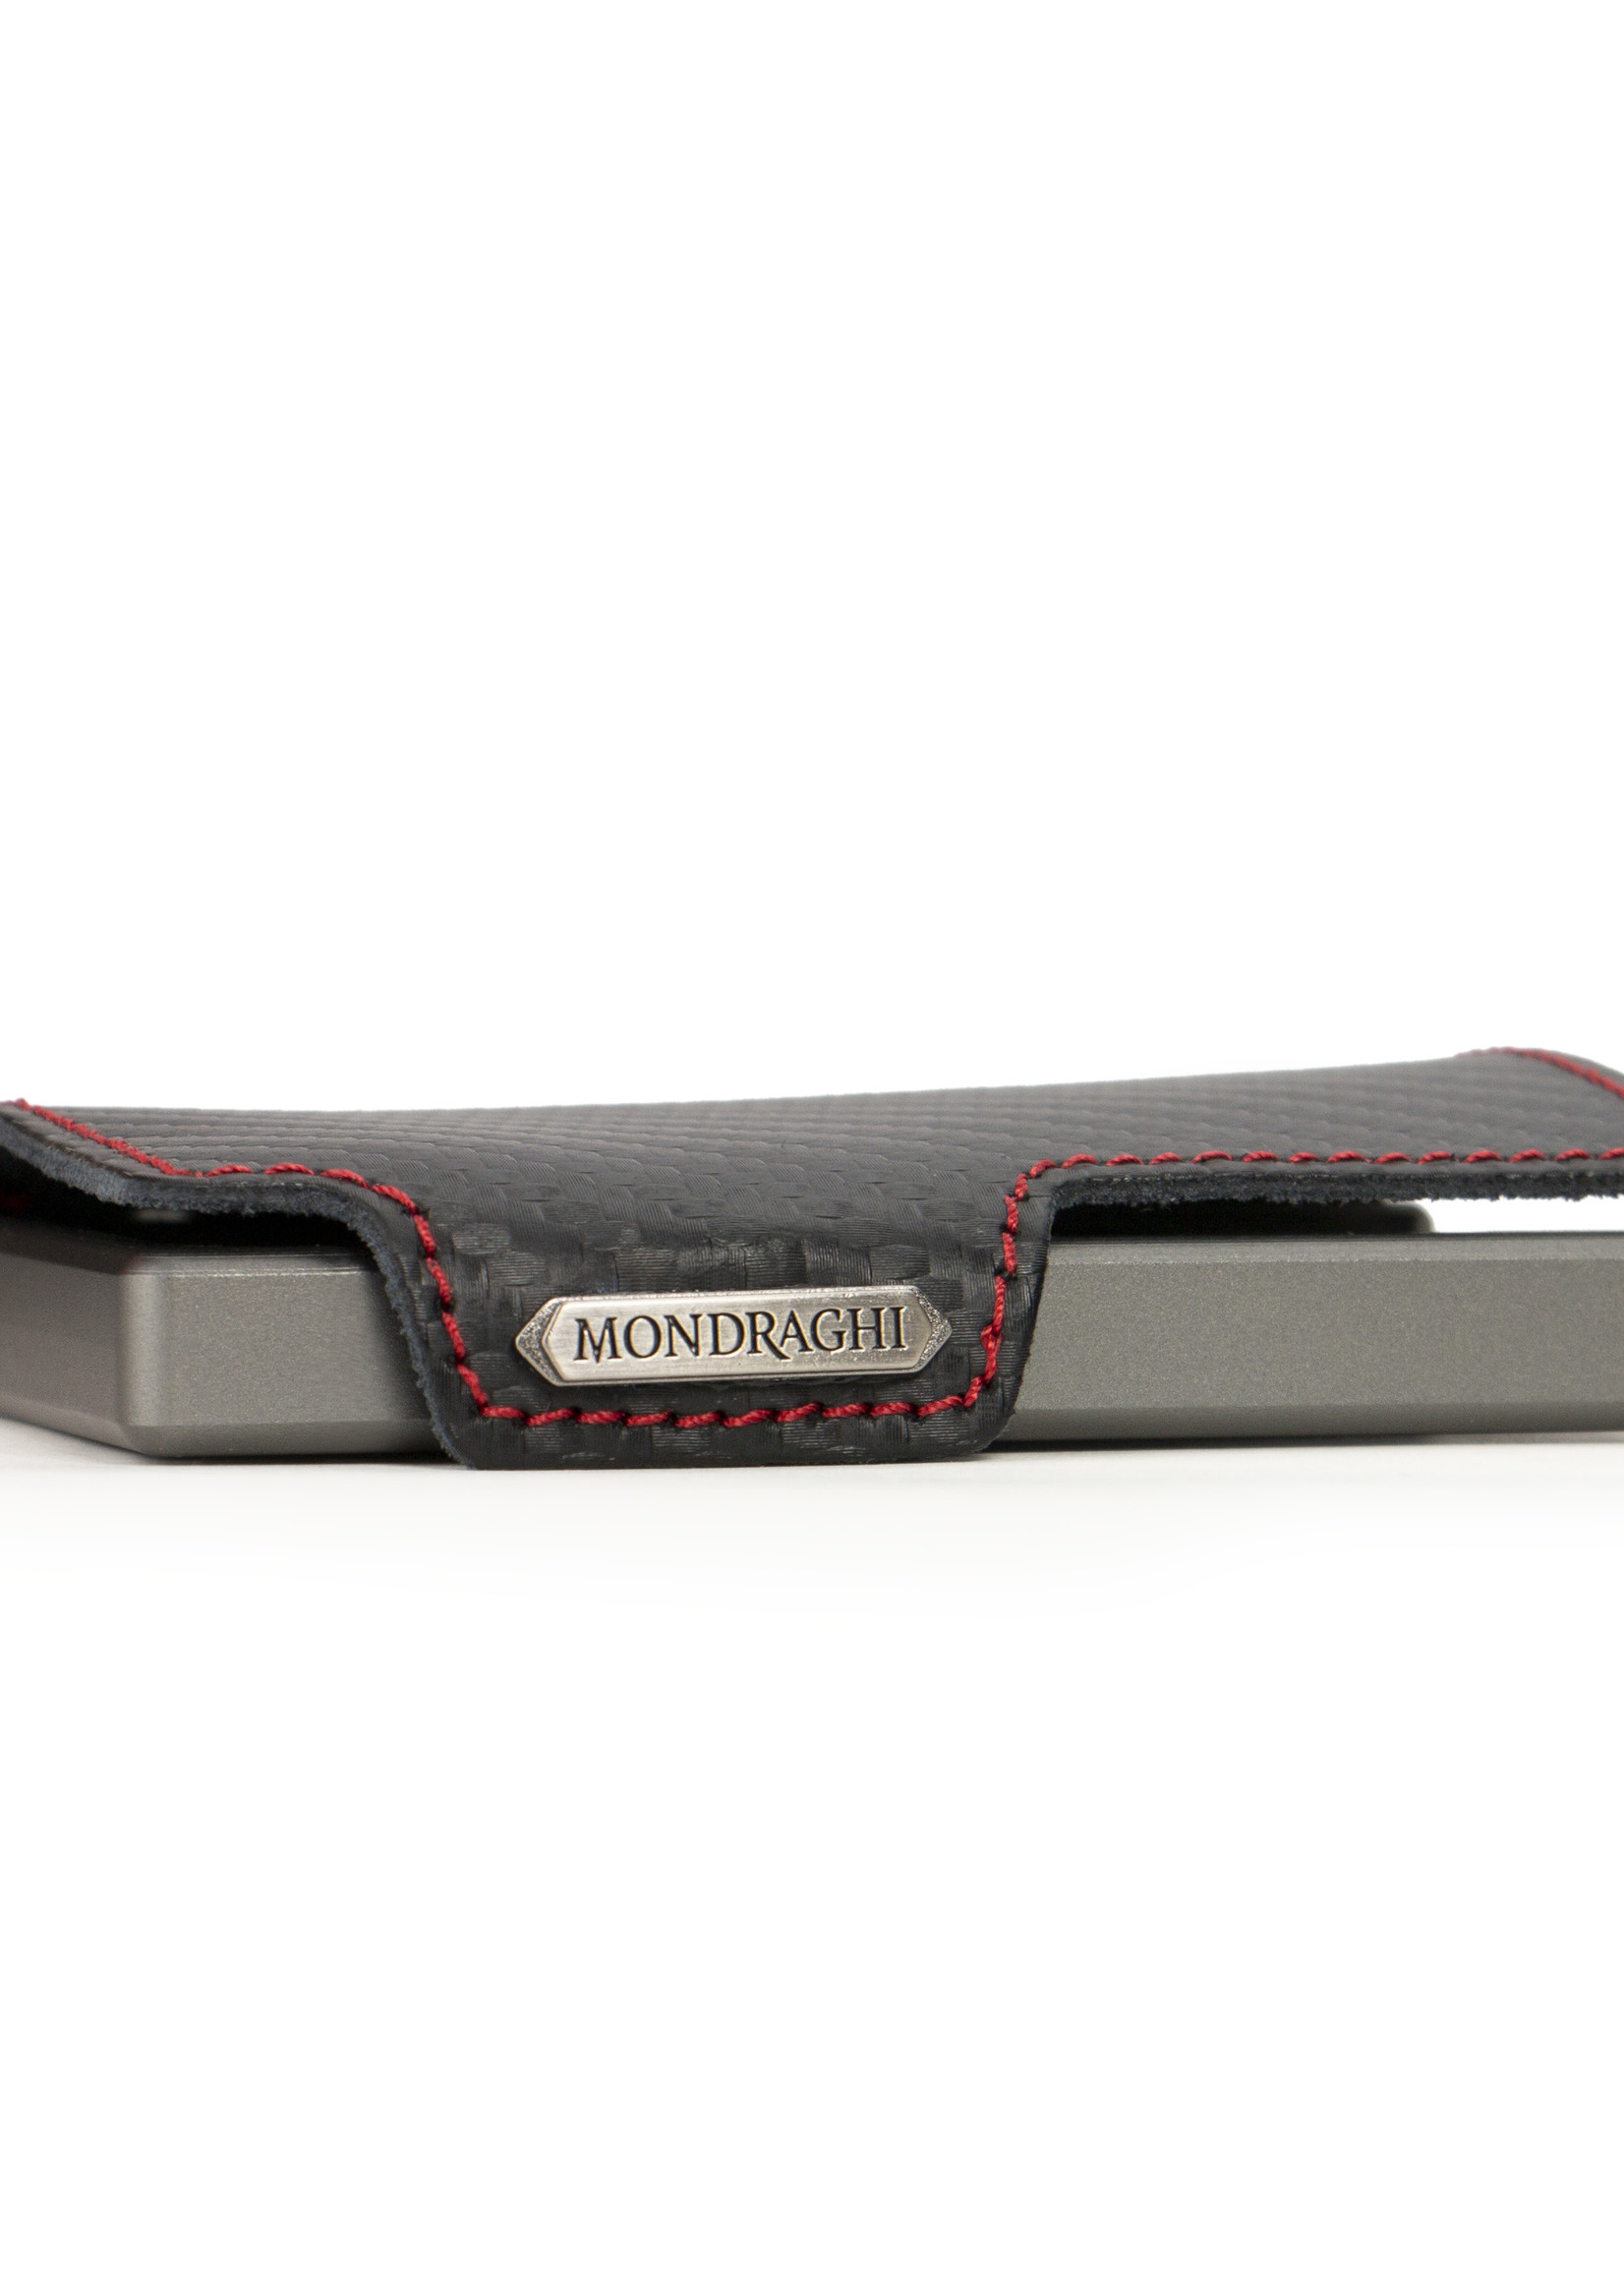 MONDRAGHI Racing Stitched Magic Wallet betaalpashouder